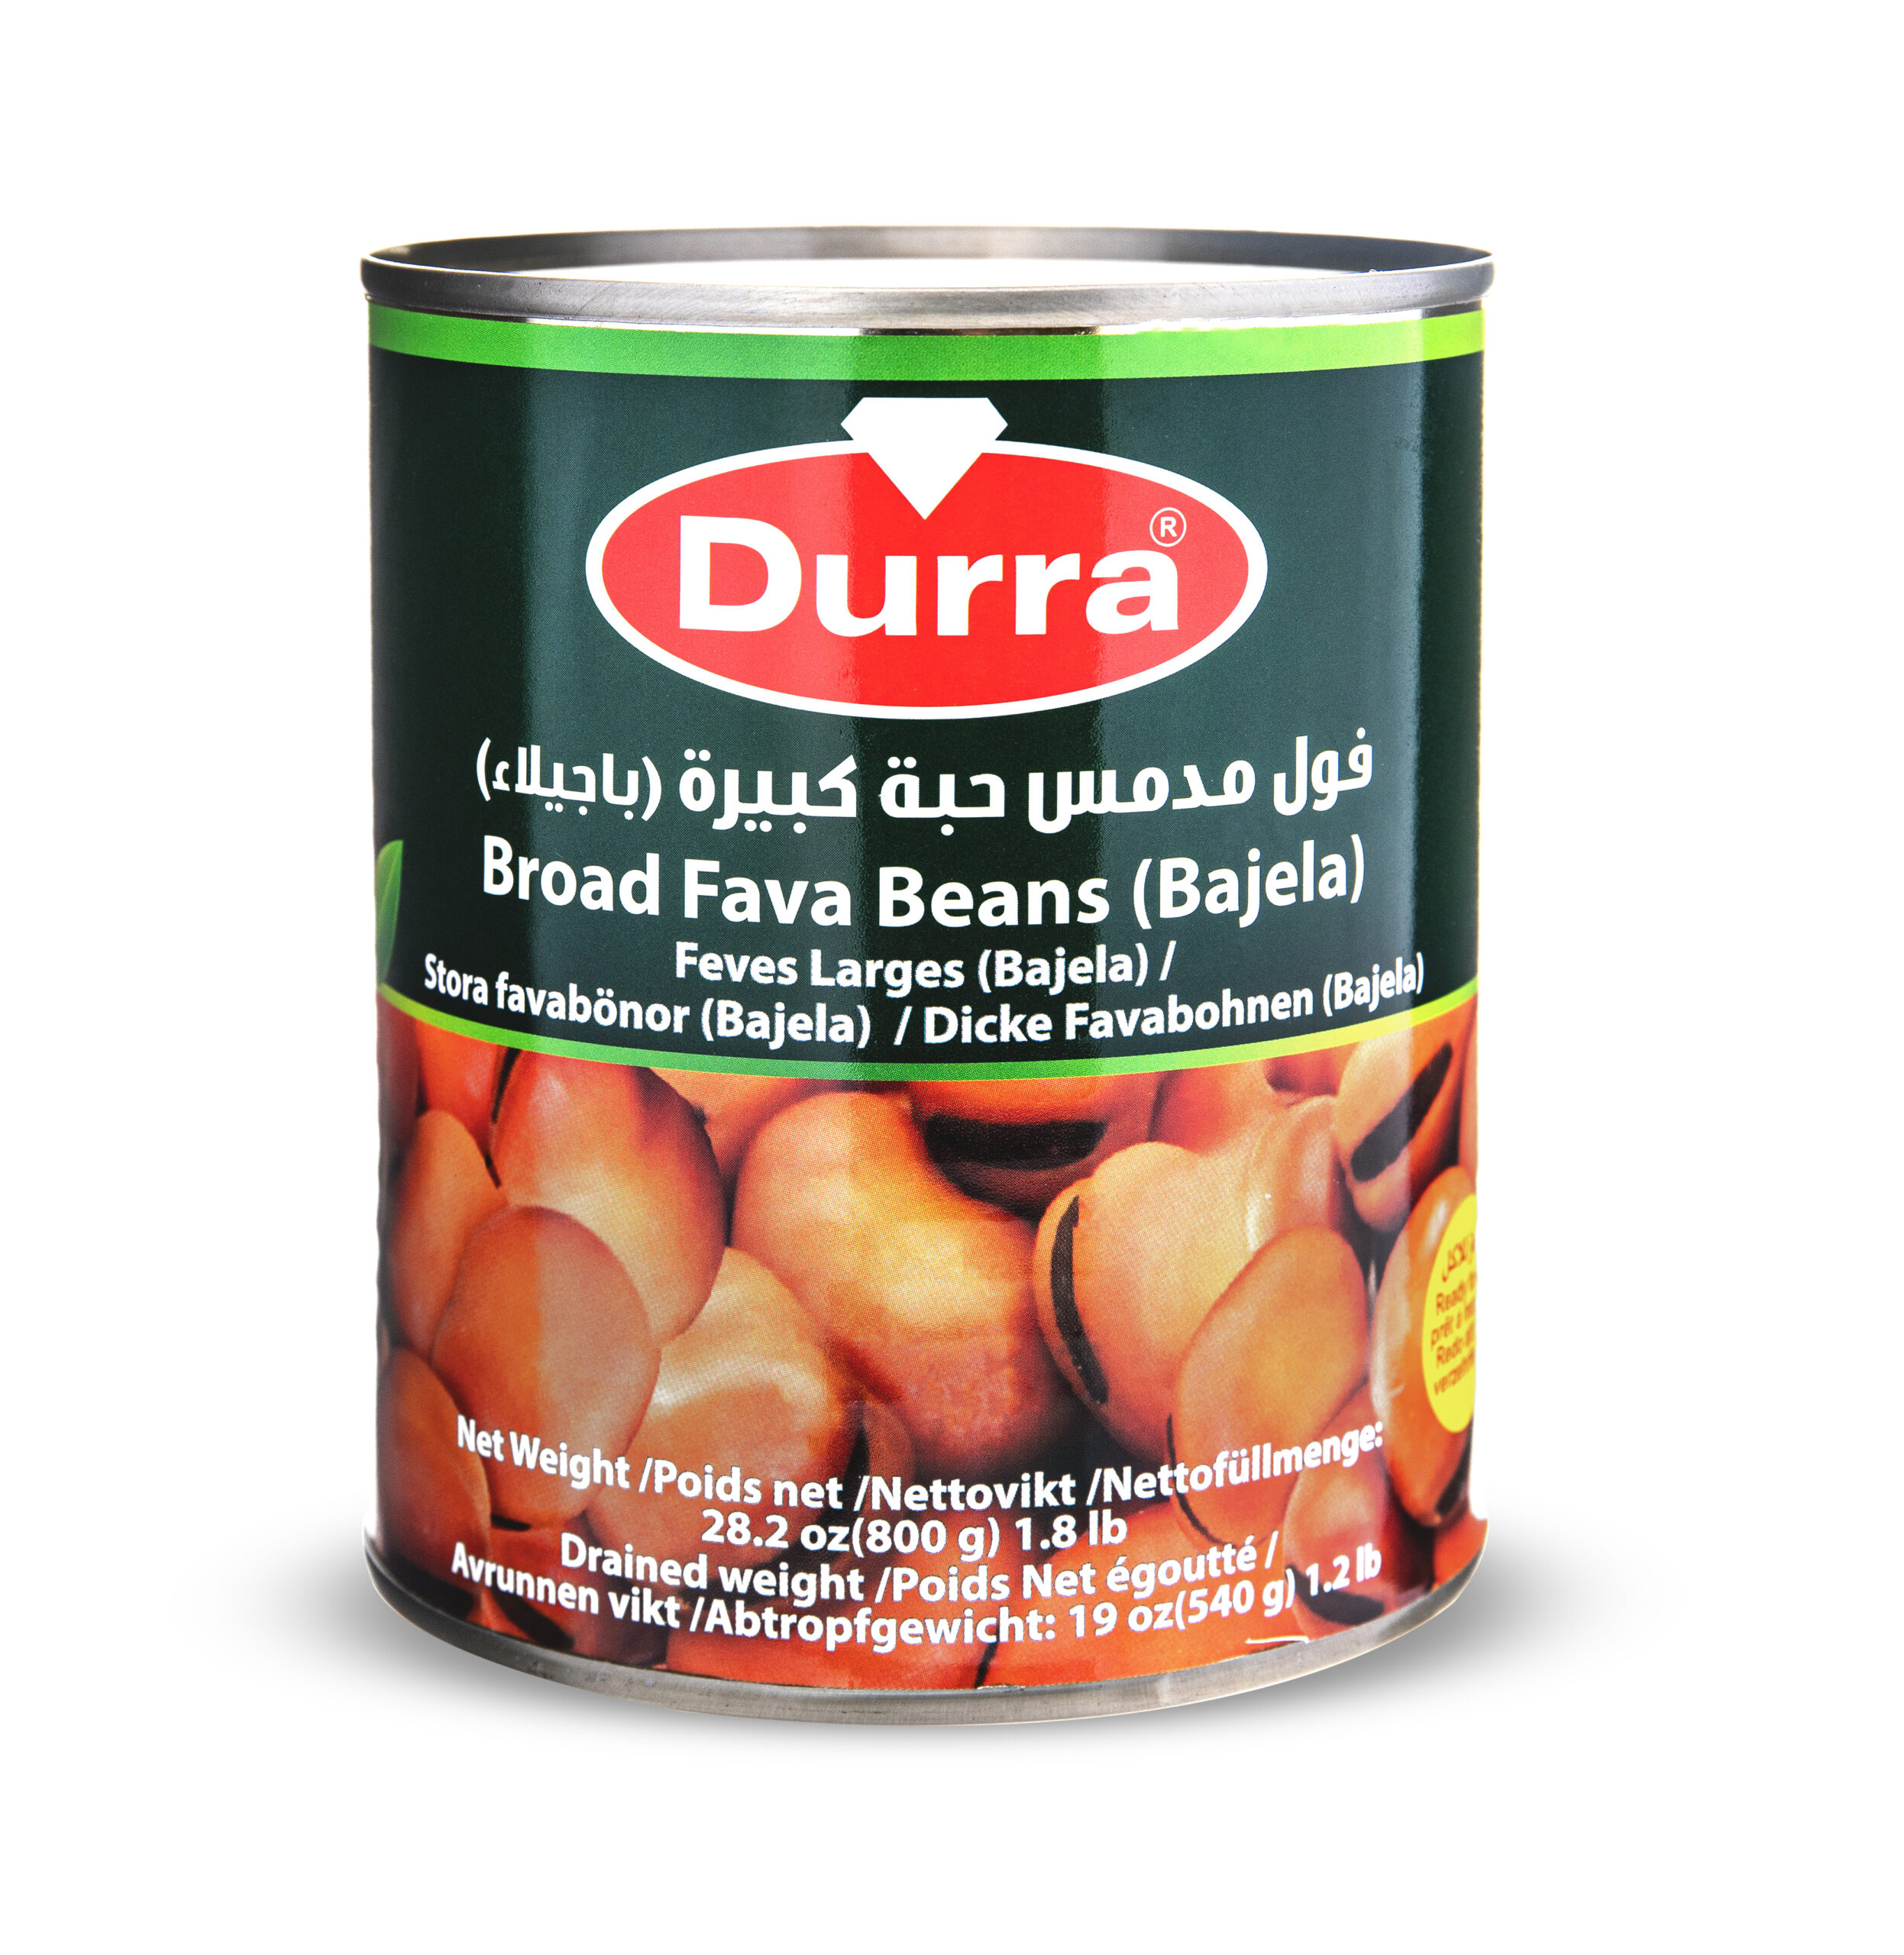 Broad Fava Beans (Bajela)